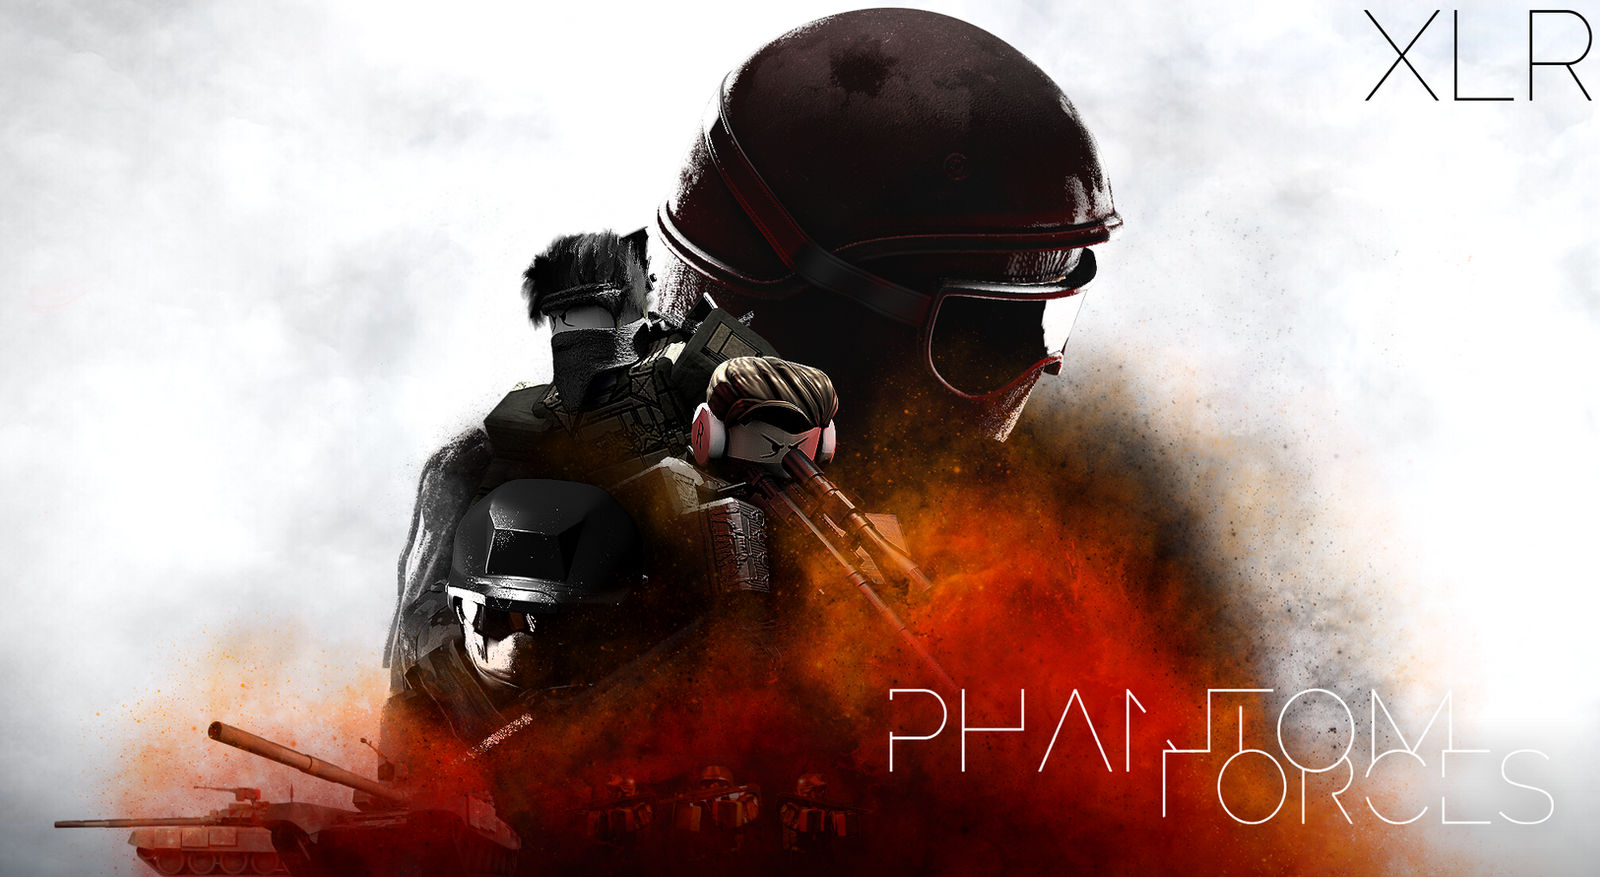 Phantom Forces but OwO : r/PhantomForces